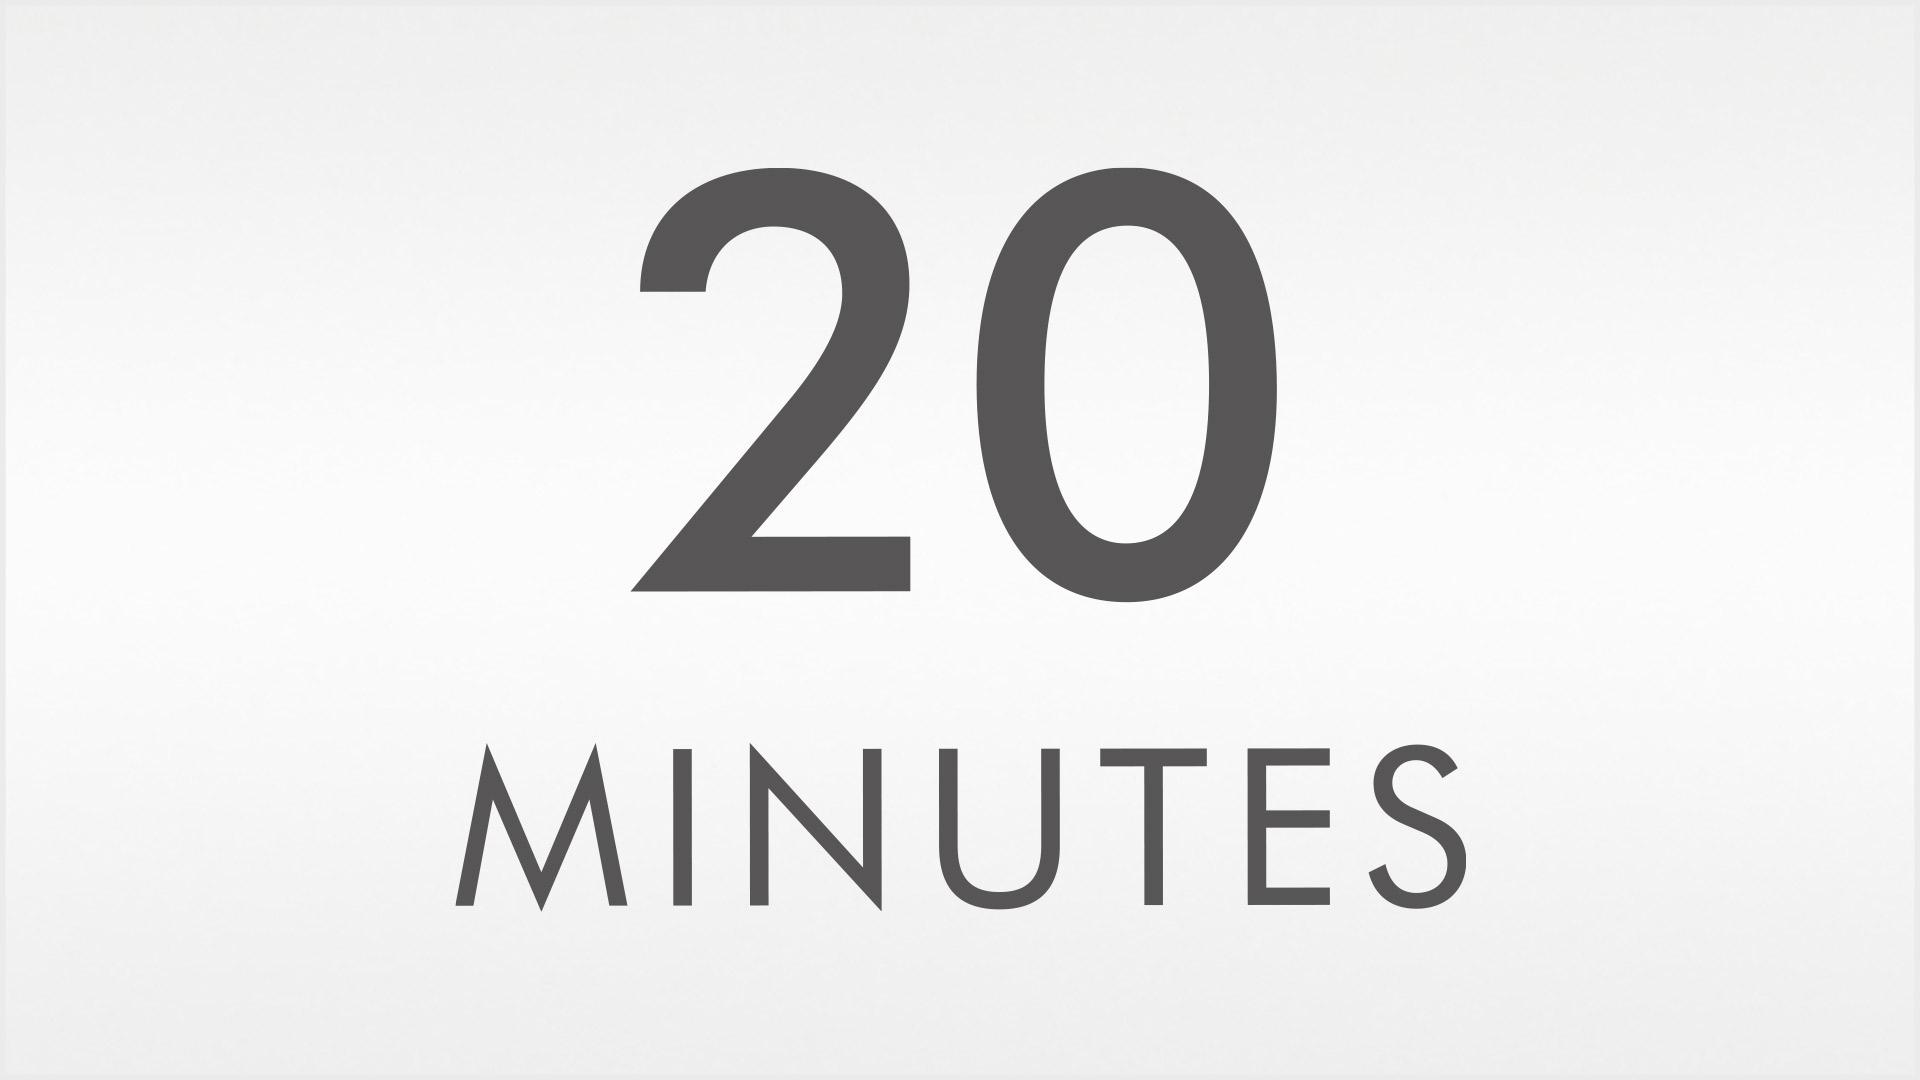 20-minute tun time image